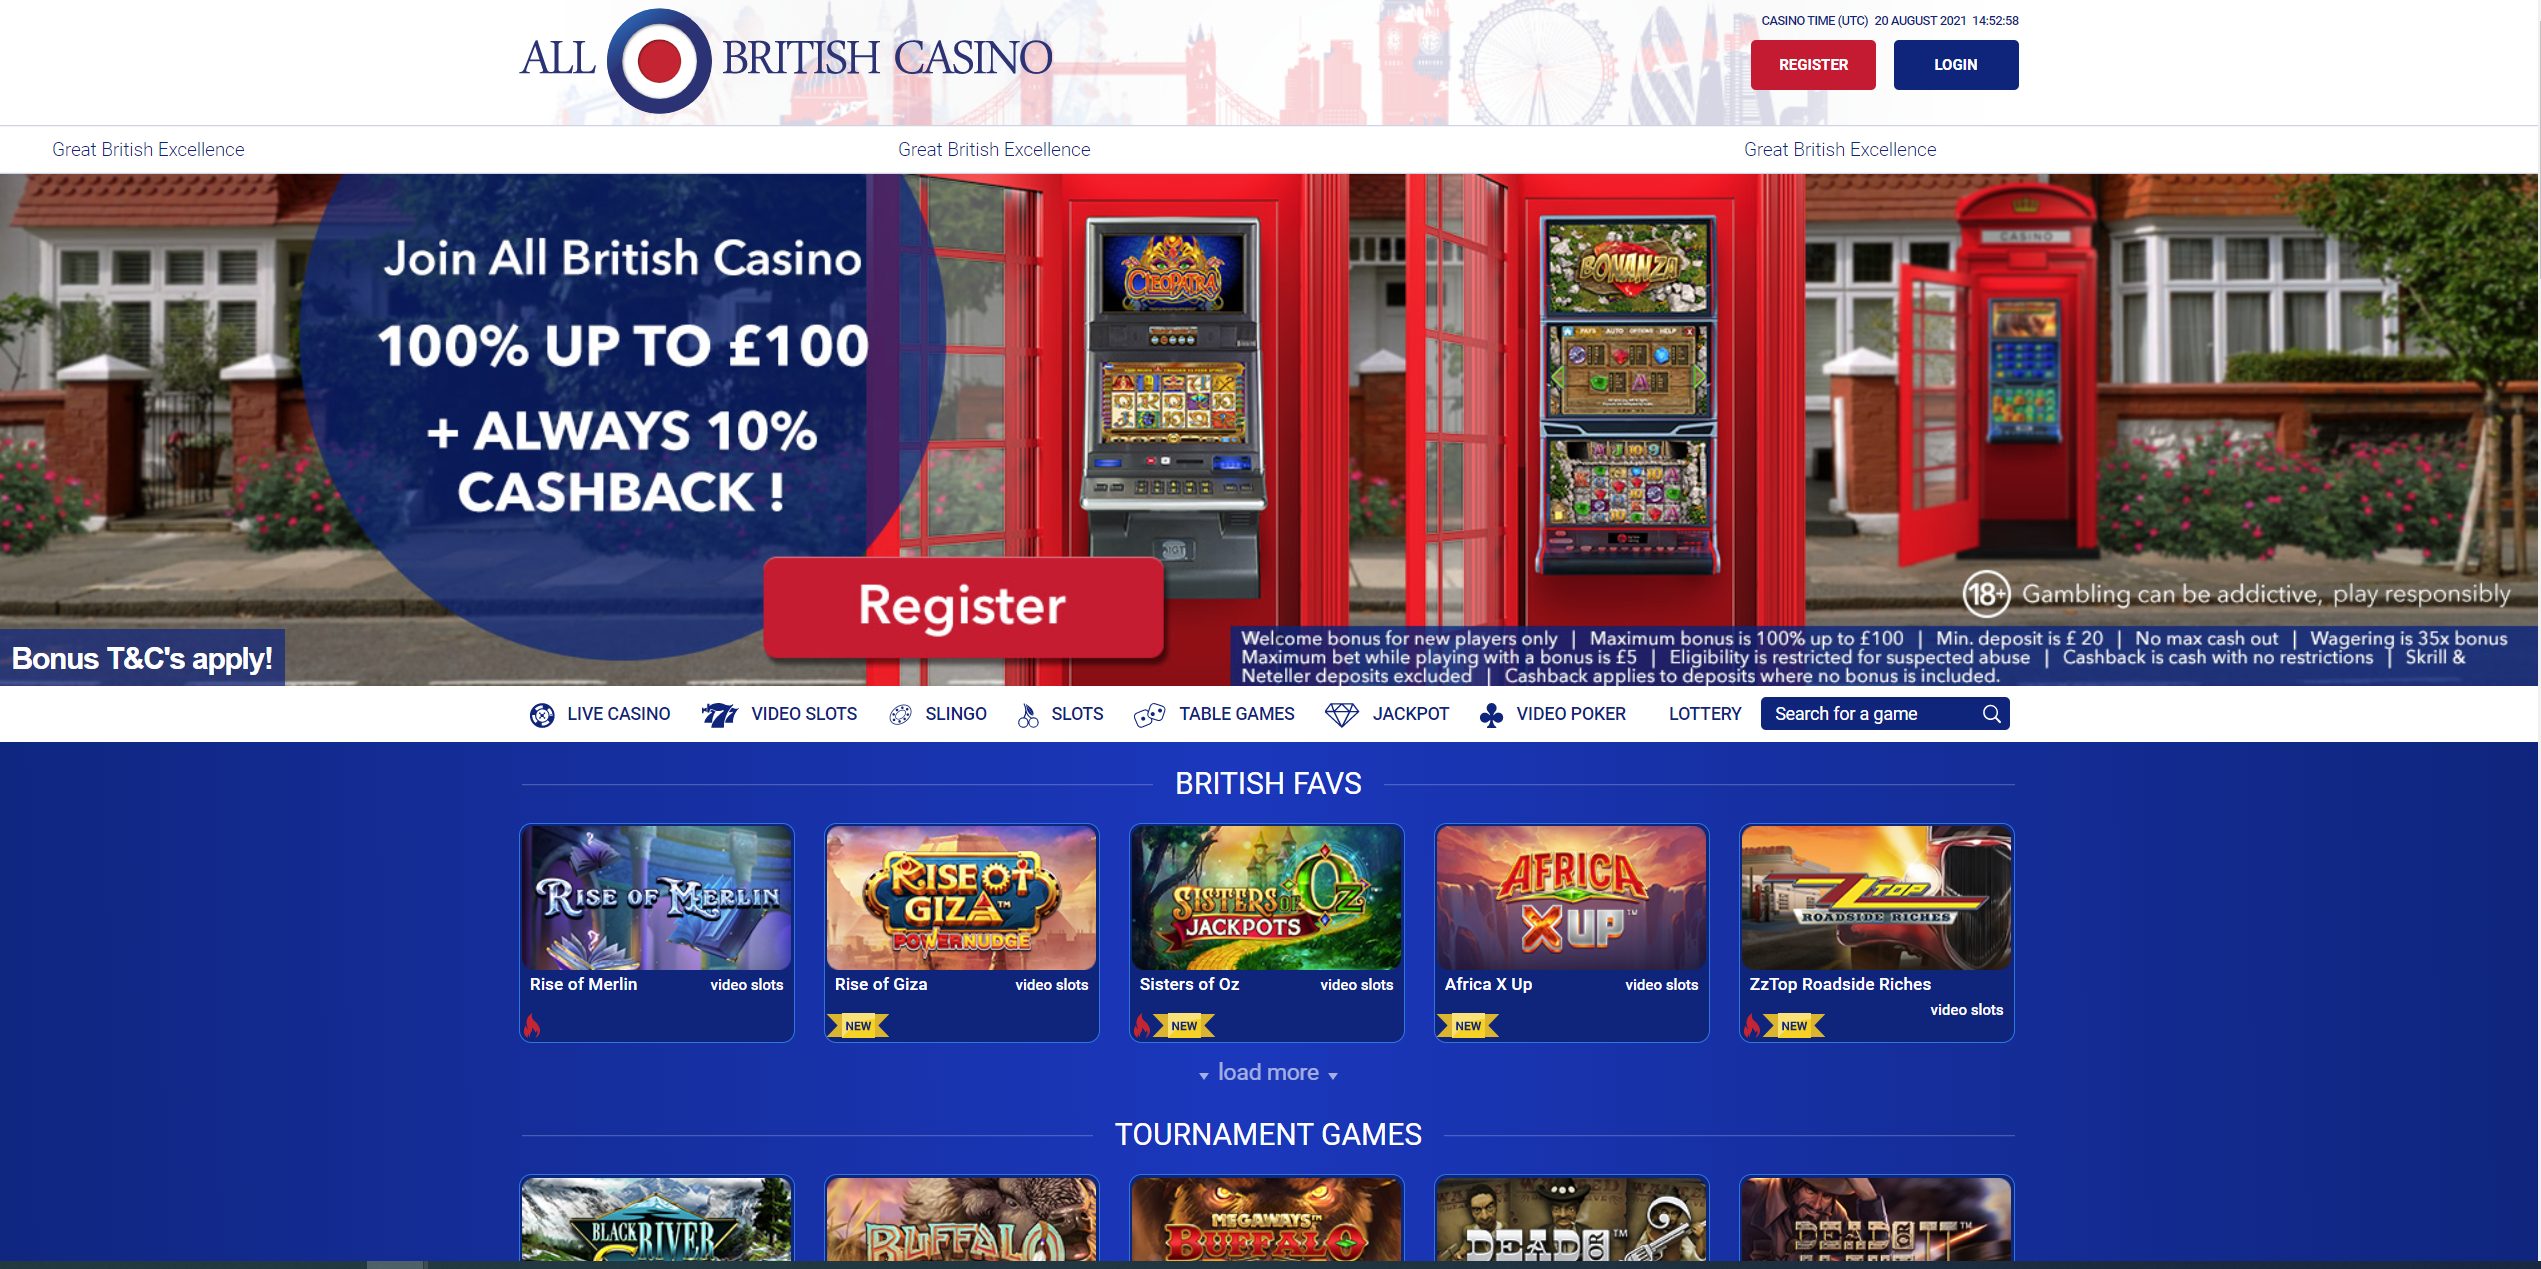 All British Casino Landing Page